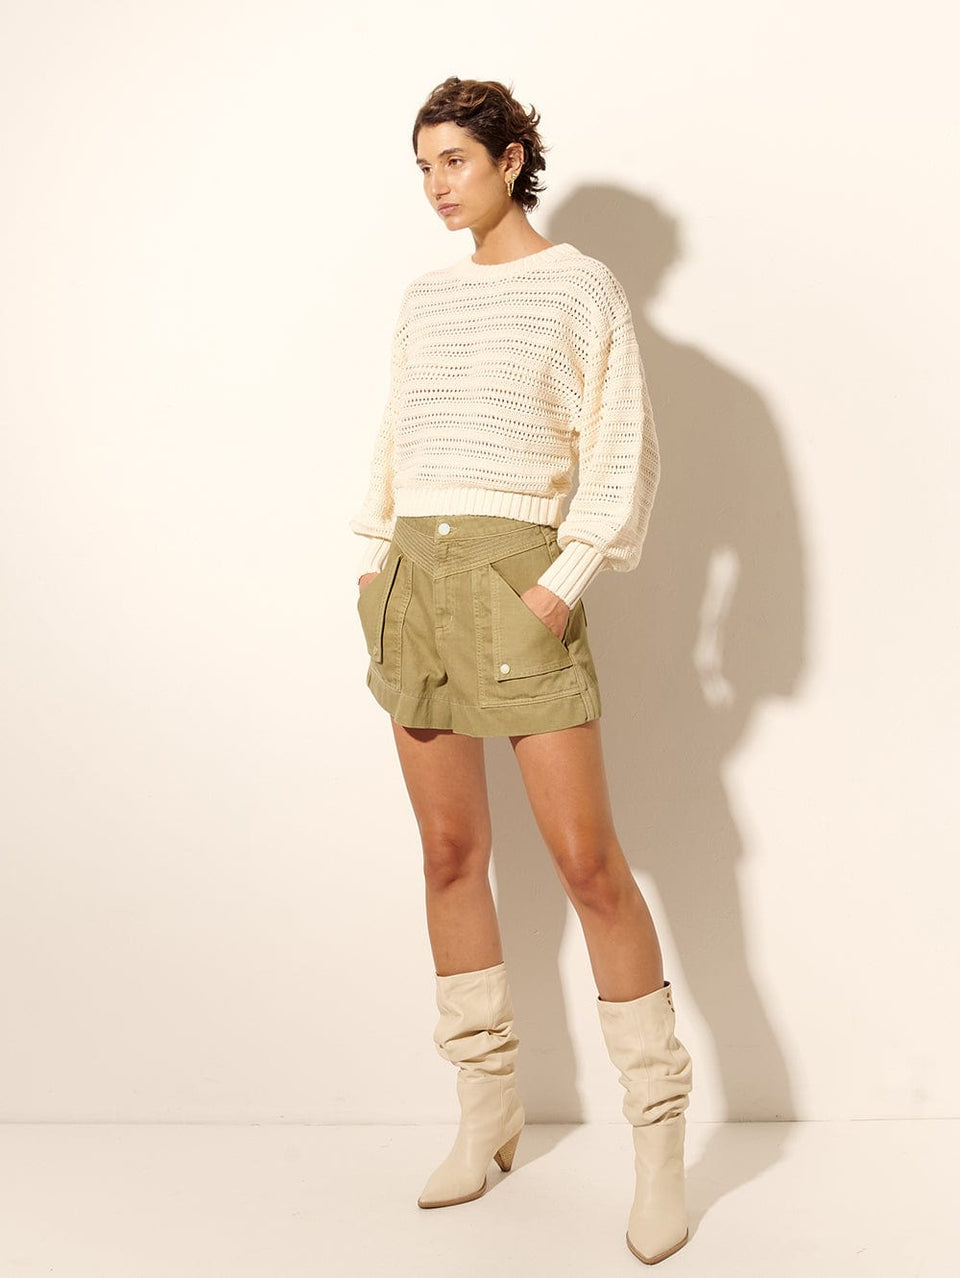 Pepe Knit Sweater Cream KIVARI | Model wears cream knit sweater side view